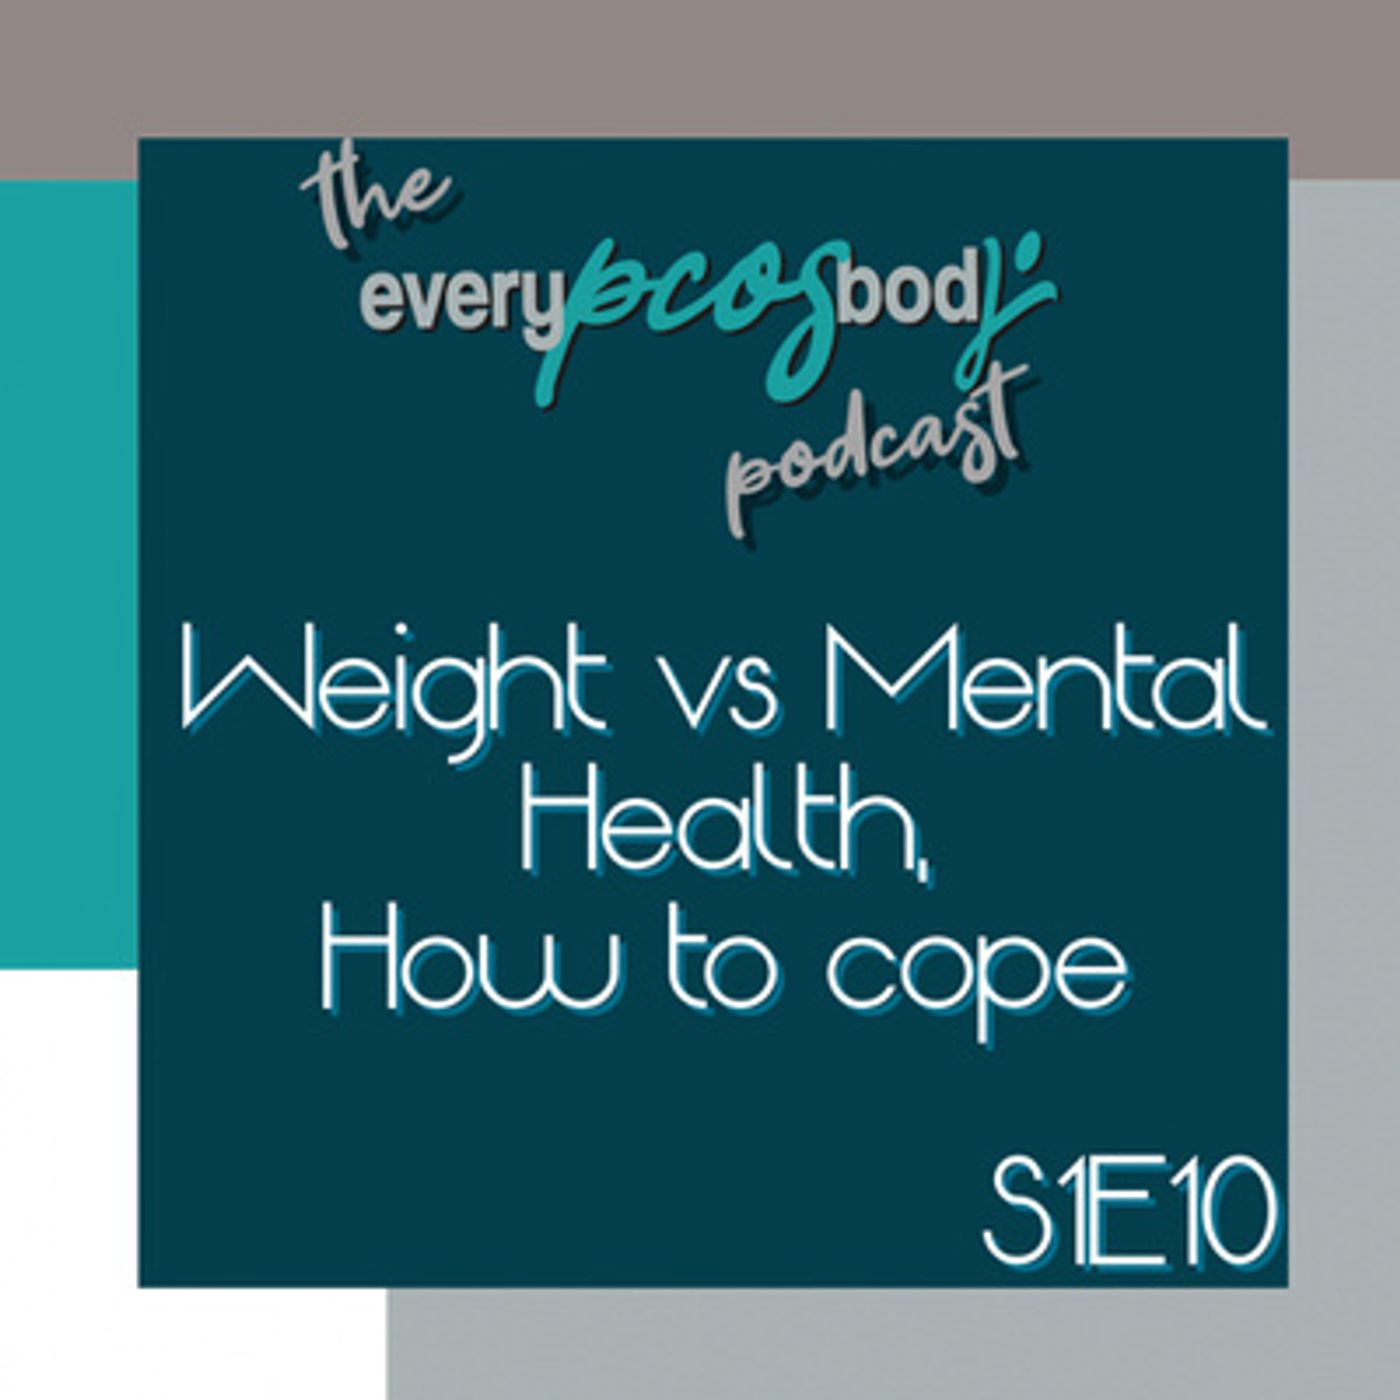 S1E10 Weight vs Mental Health